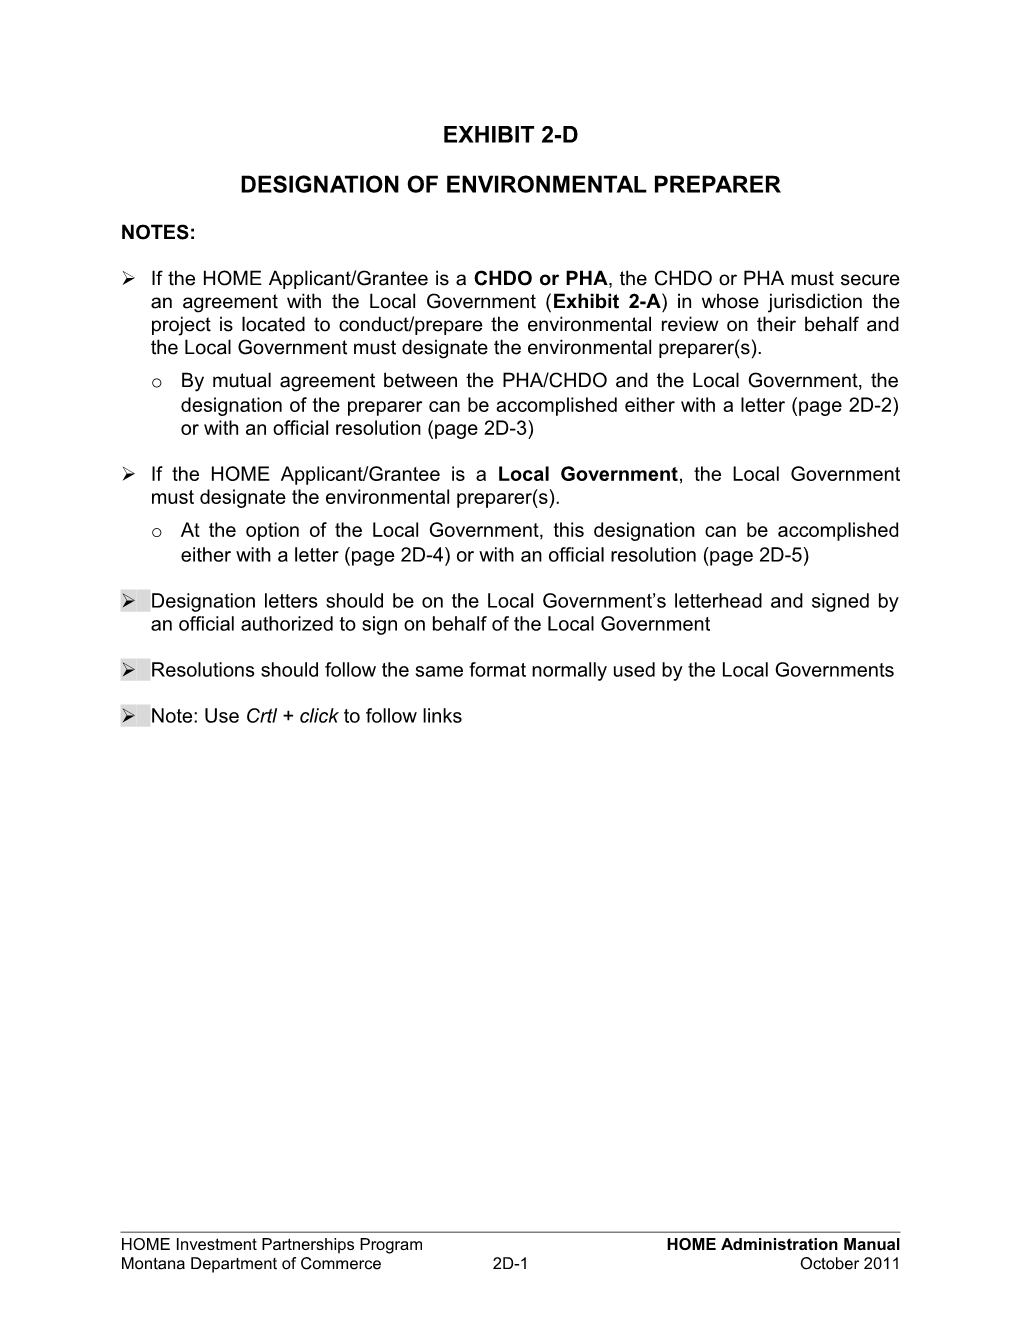 Designation of Environmental Preparer